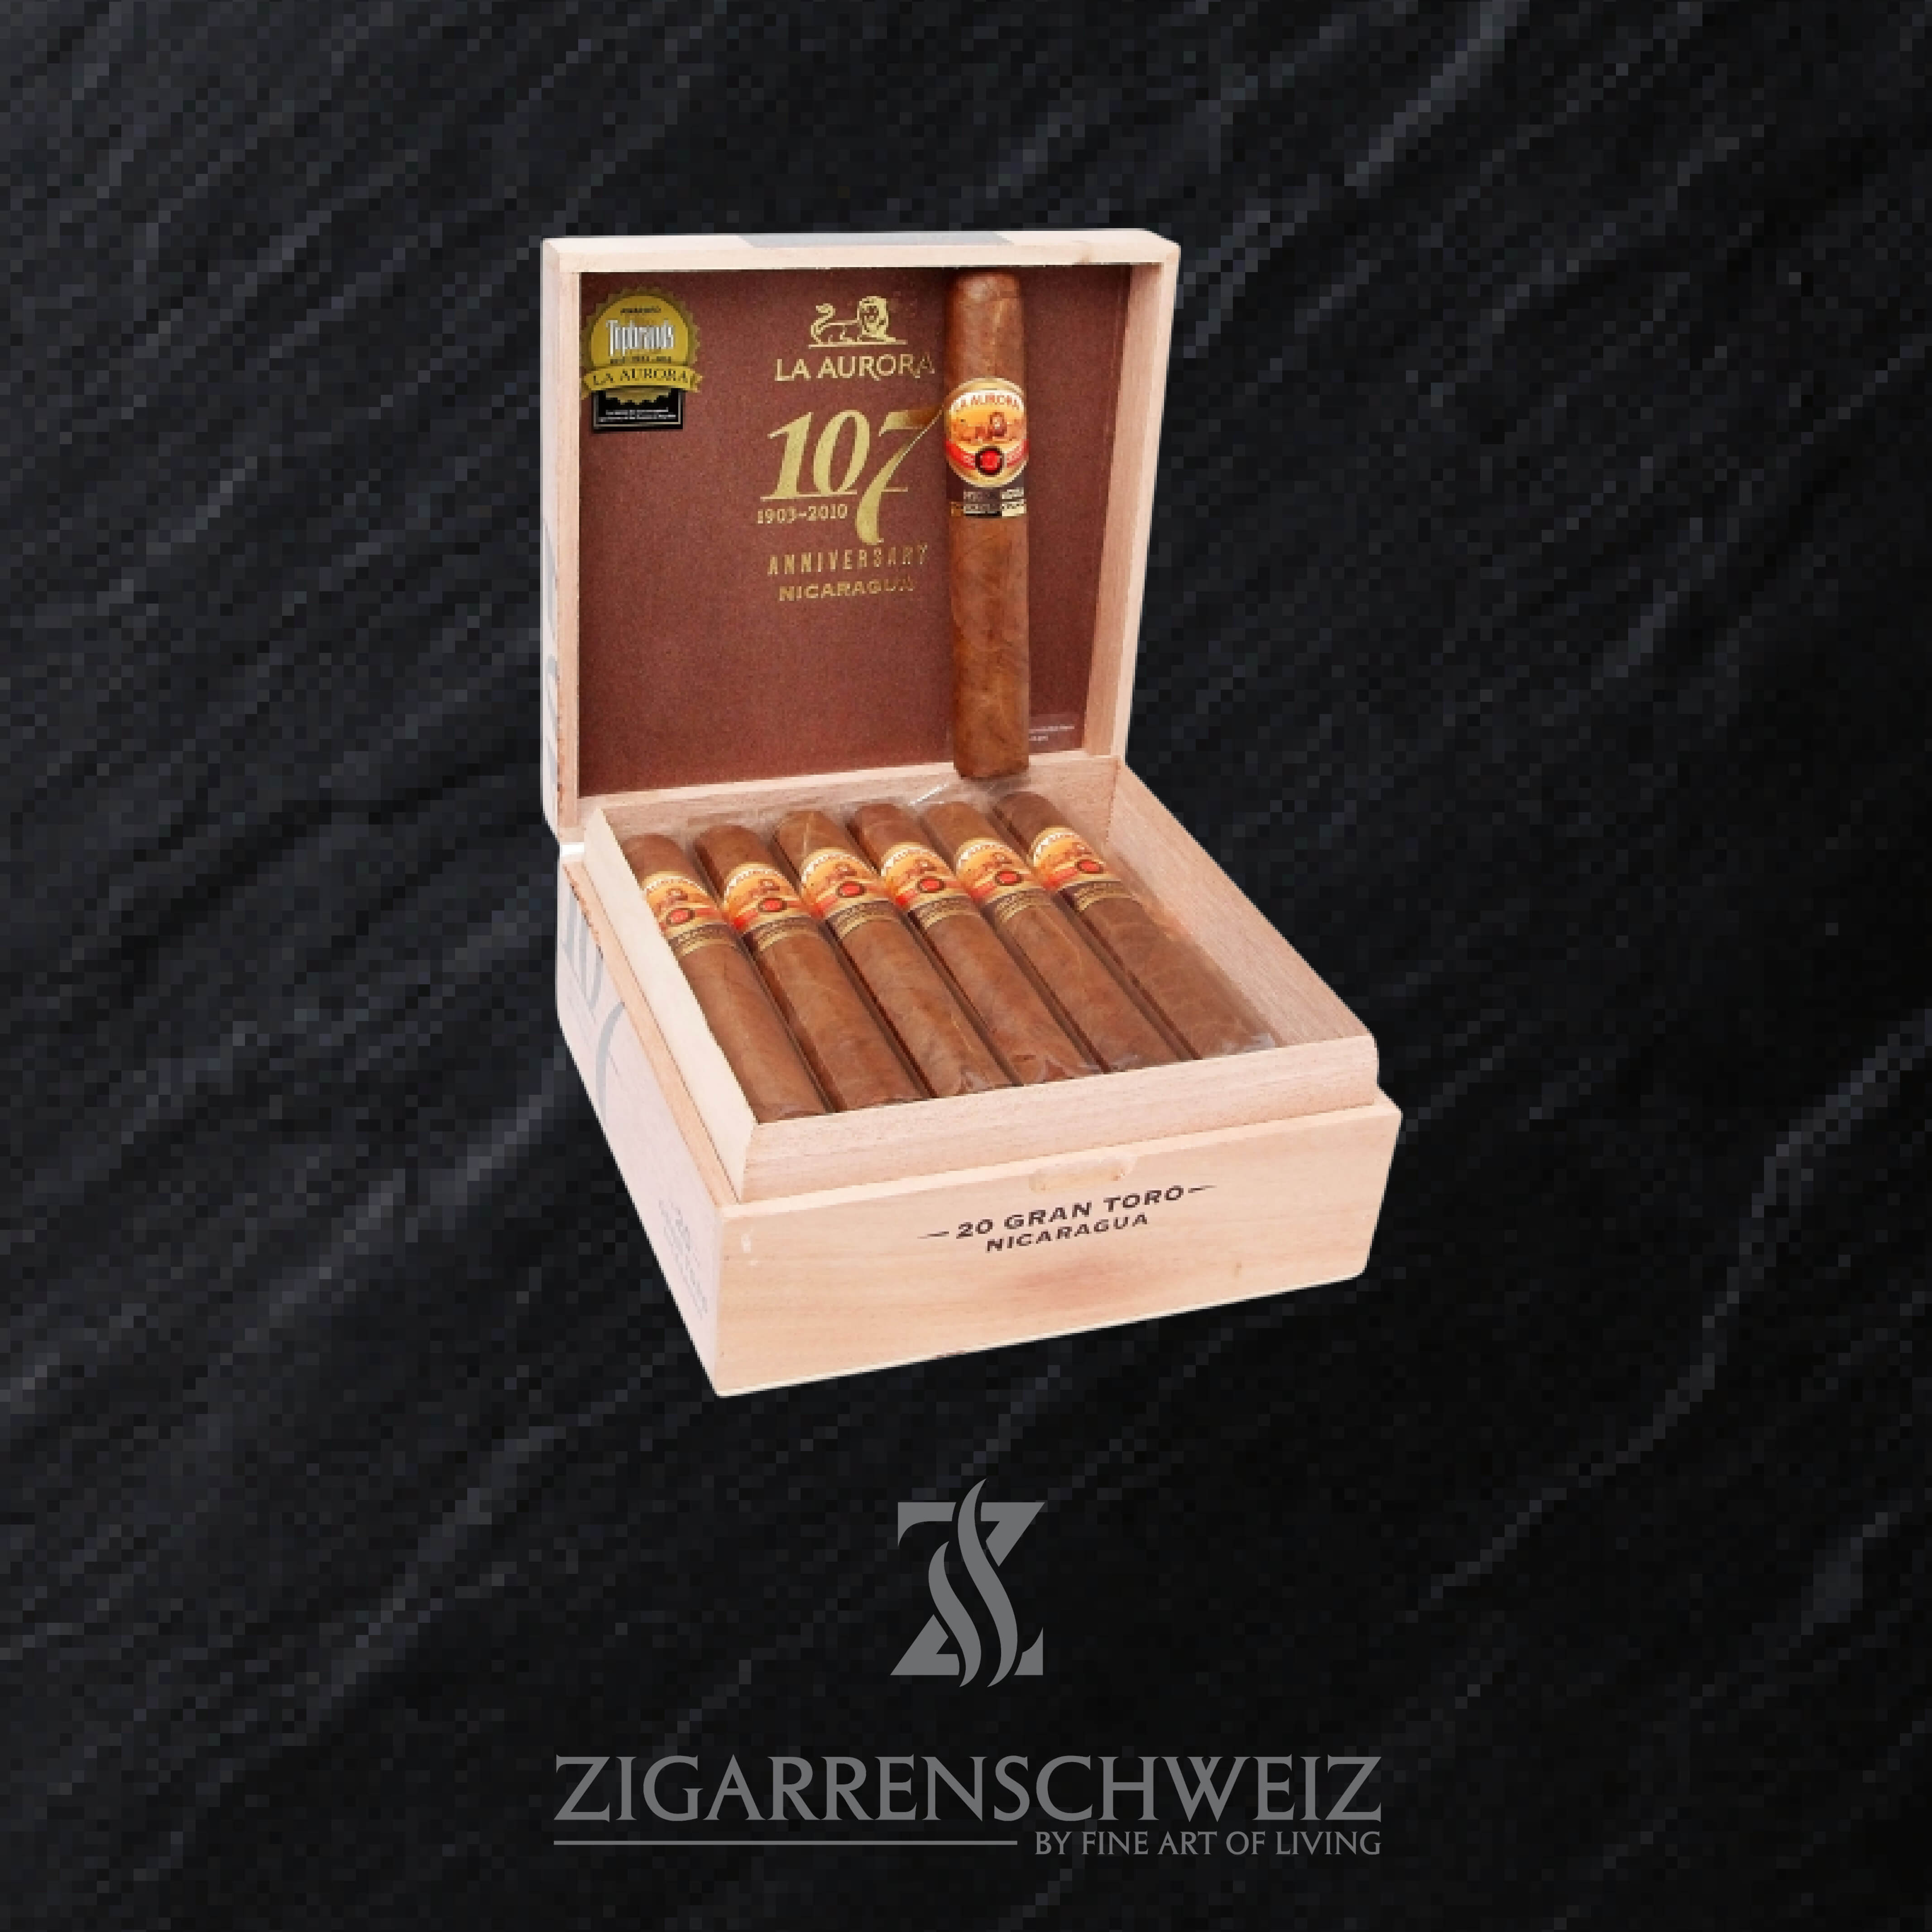 La Aurora 107 Nicaragua Gran Toro Zigarren Kiste geöffnet